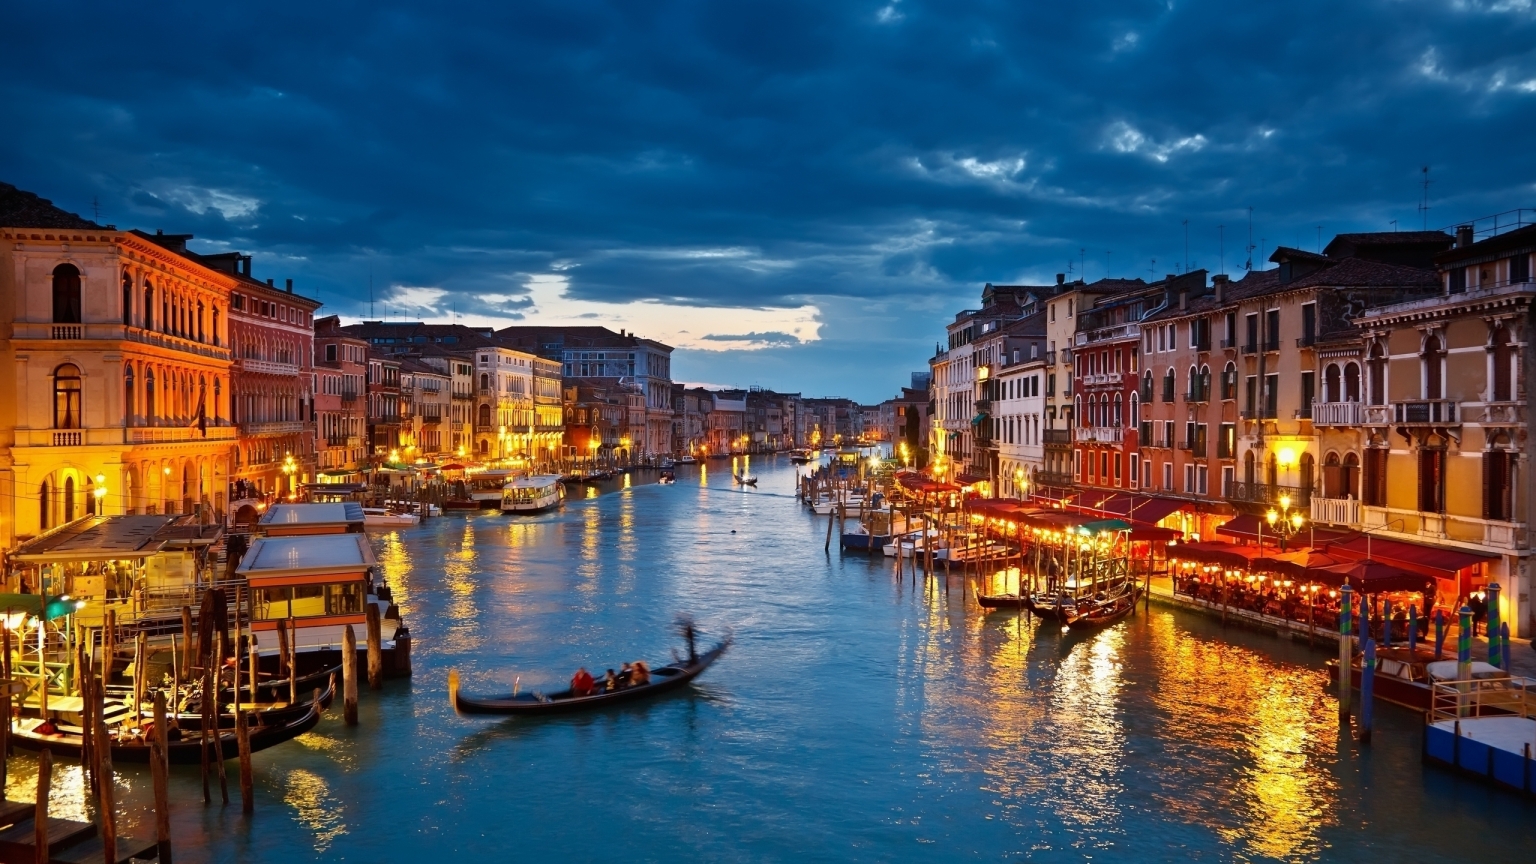 Night in Venice for 1536 x 864 HDTV resolution